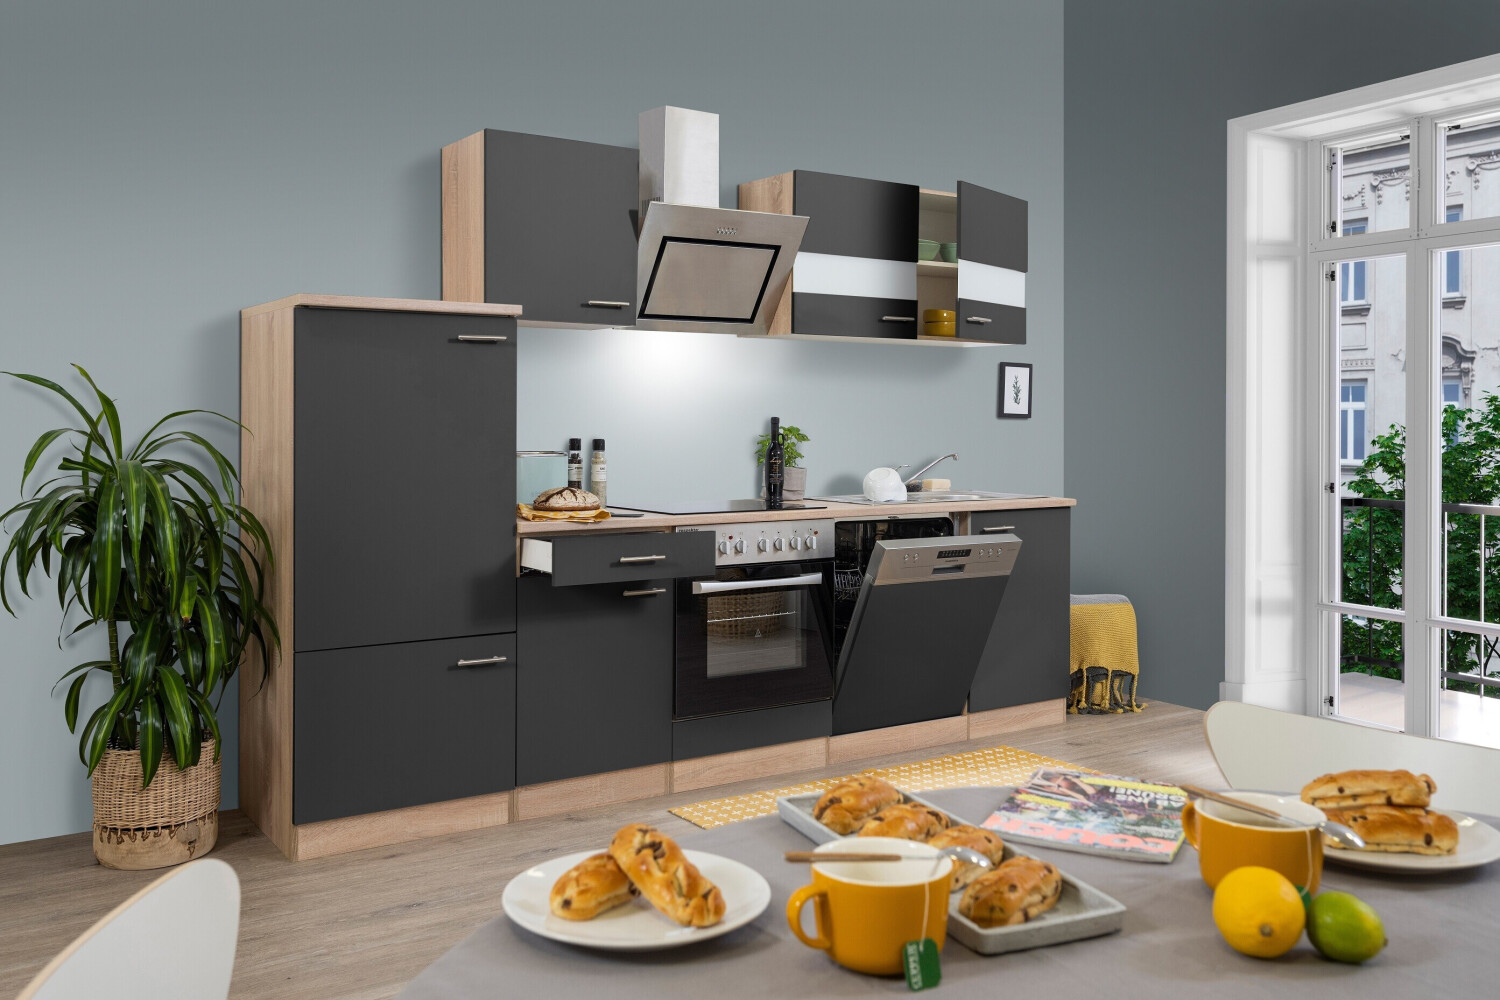 Respekta Küchenzeile/Küchenblock (ohne E-Geräte) 280 cm Grau-Eiche Sonoma  Sägerau ab 699,99 € | Preisvergleich bei